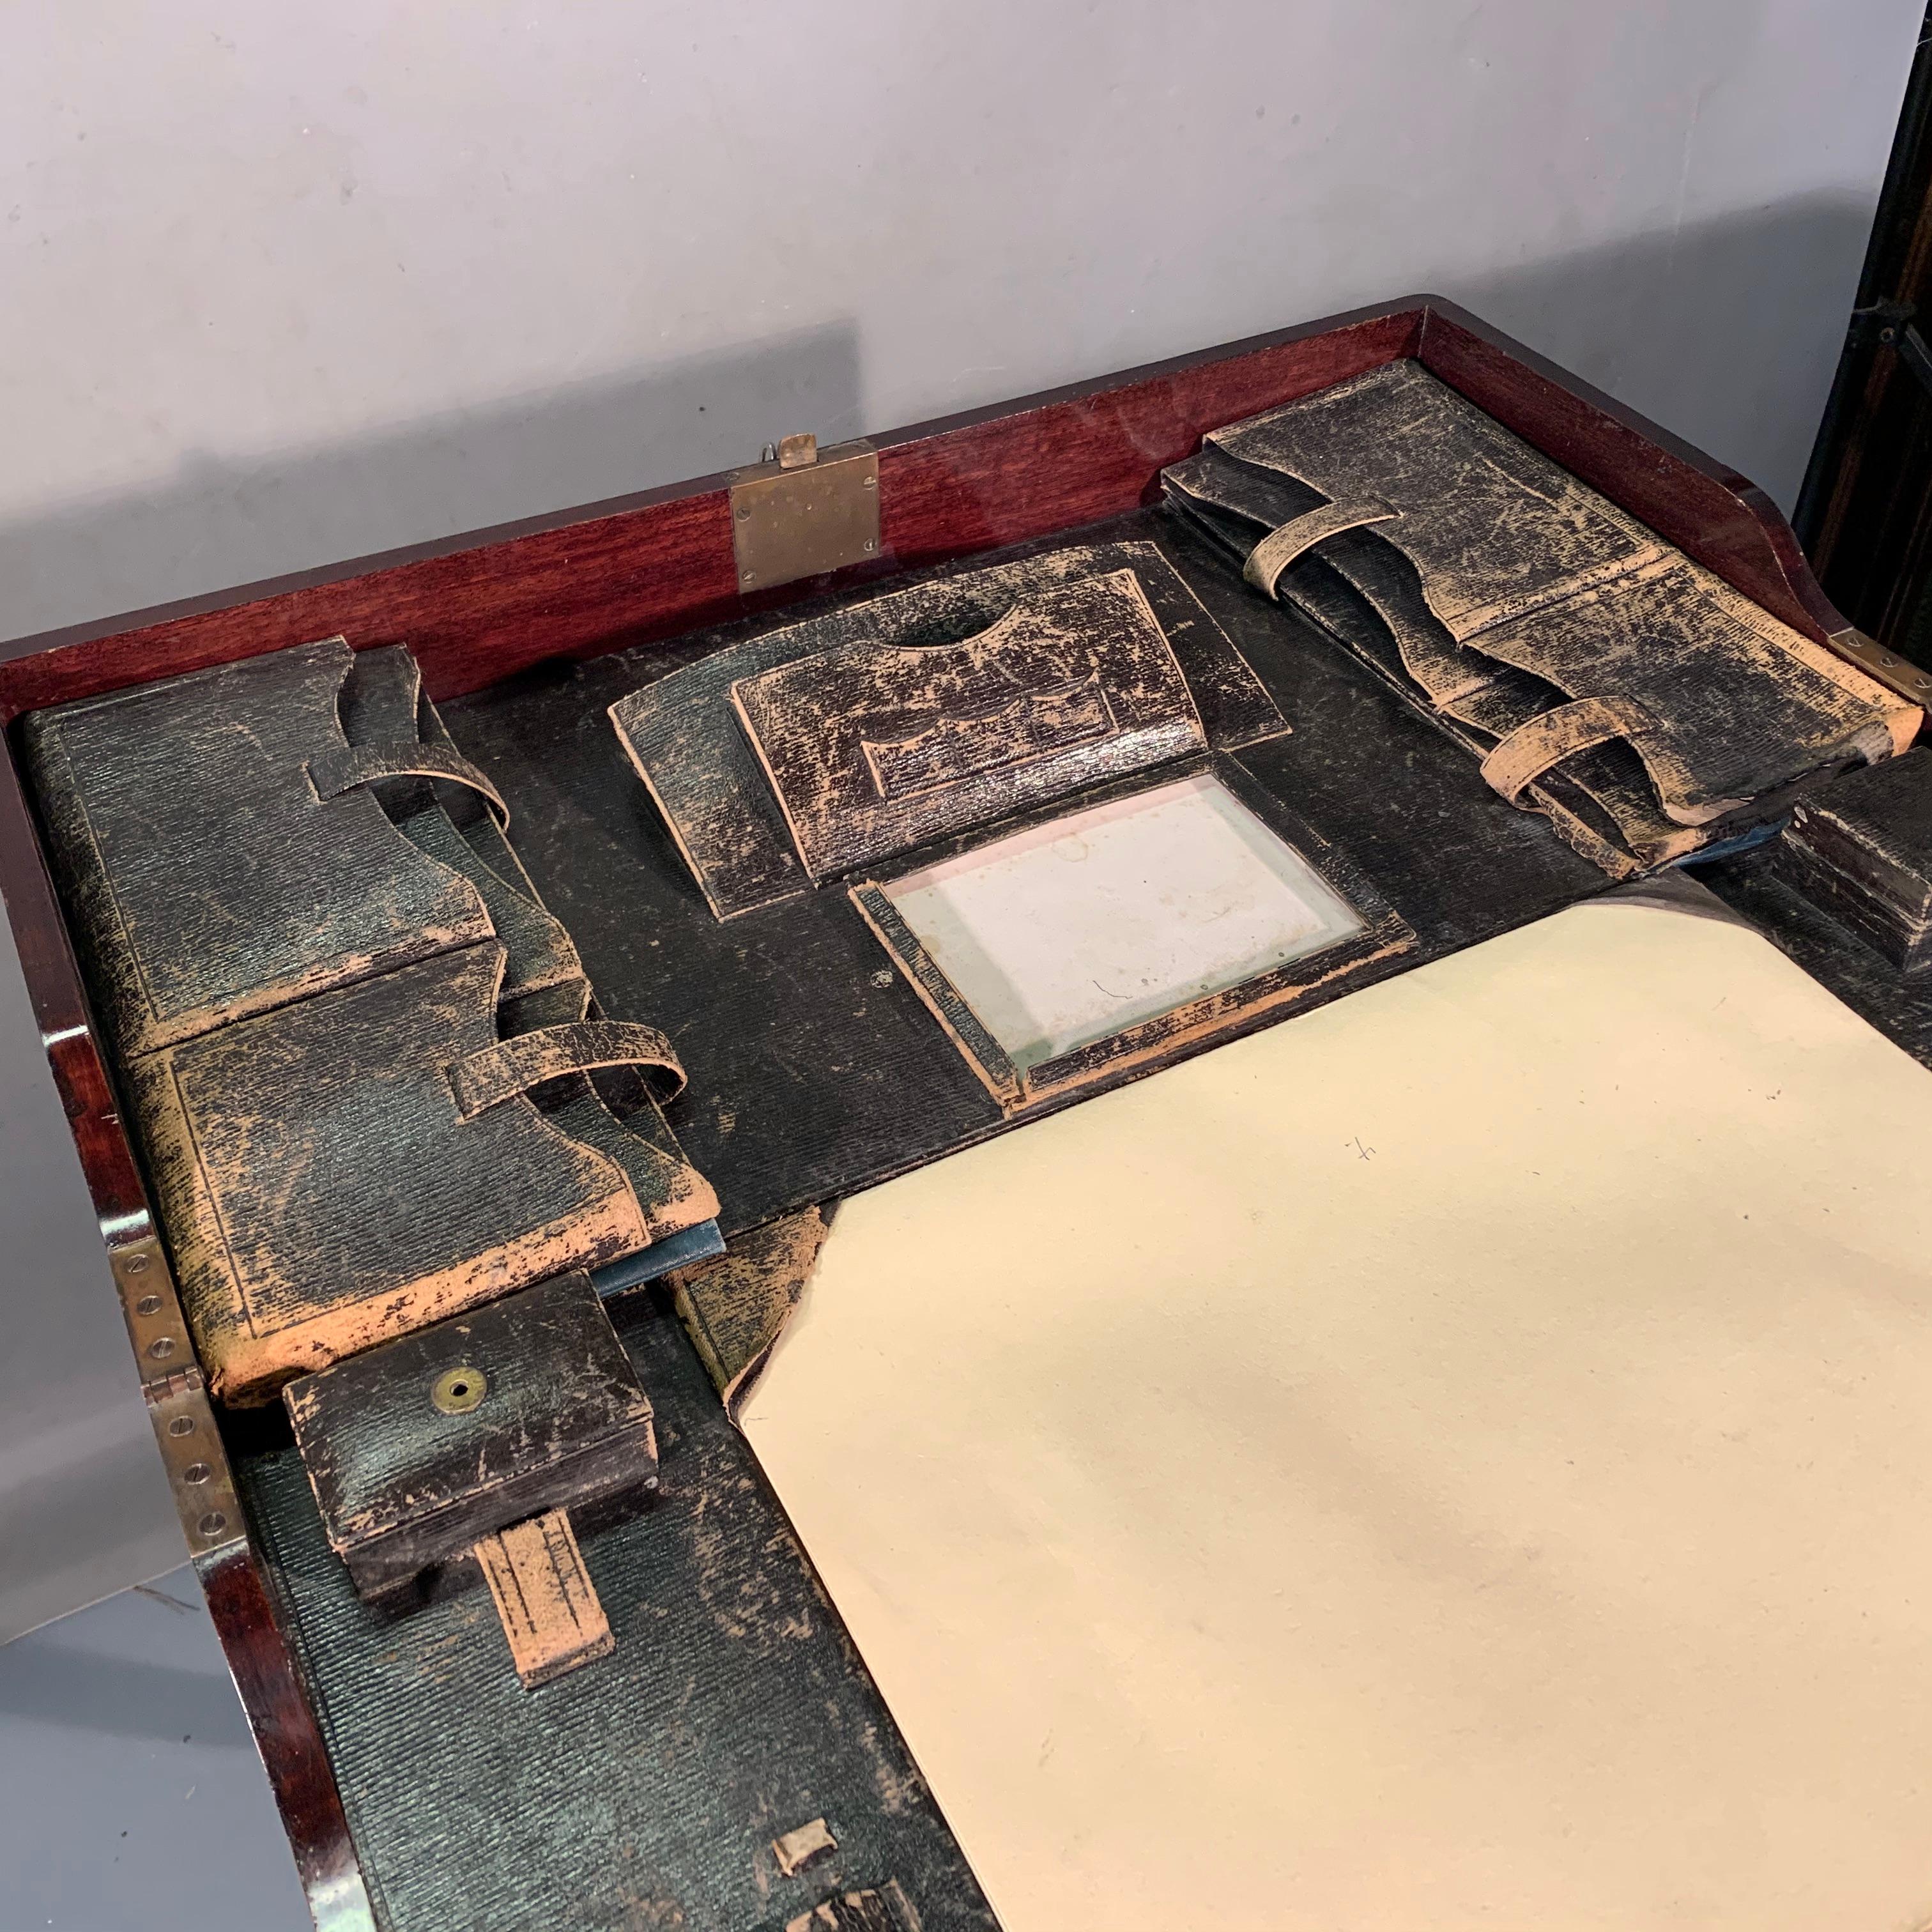 Mahogany 19th century English Folding Campaign Desk with Original Interior by Finnigans